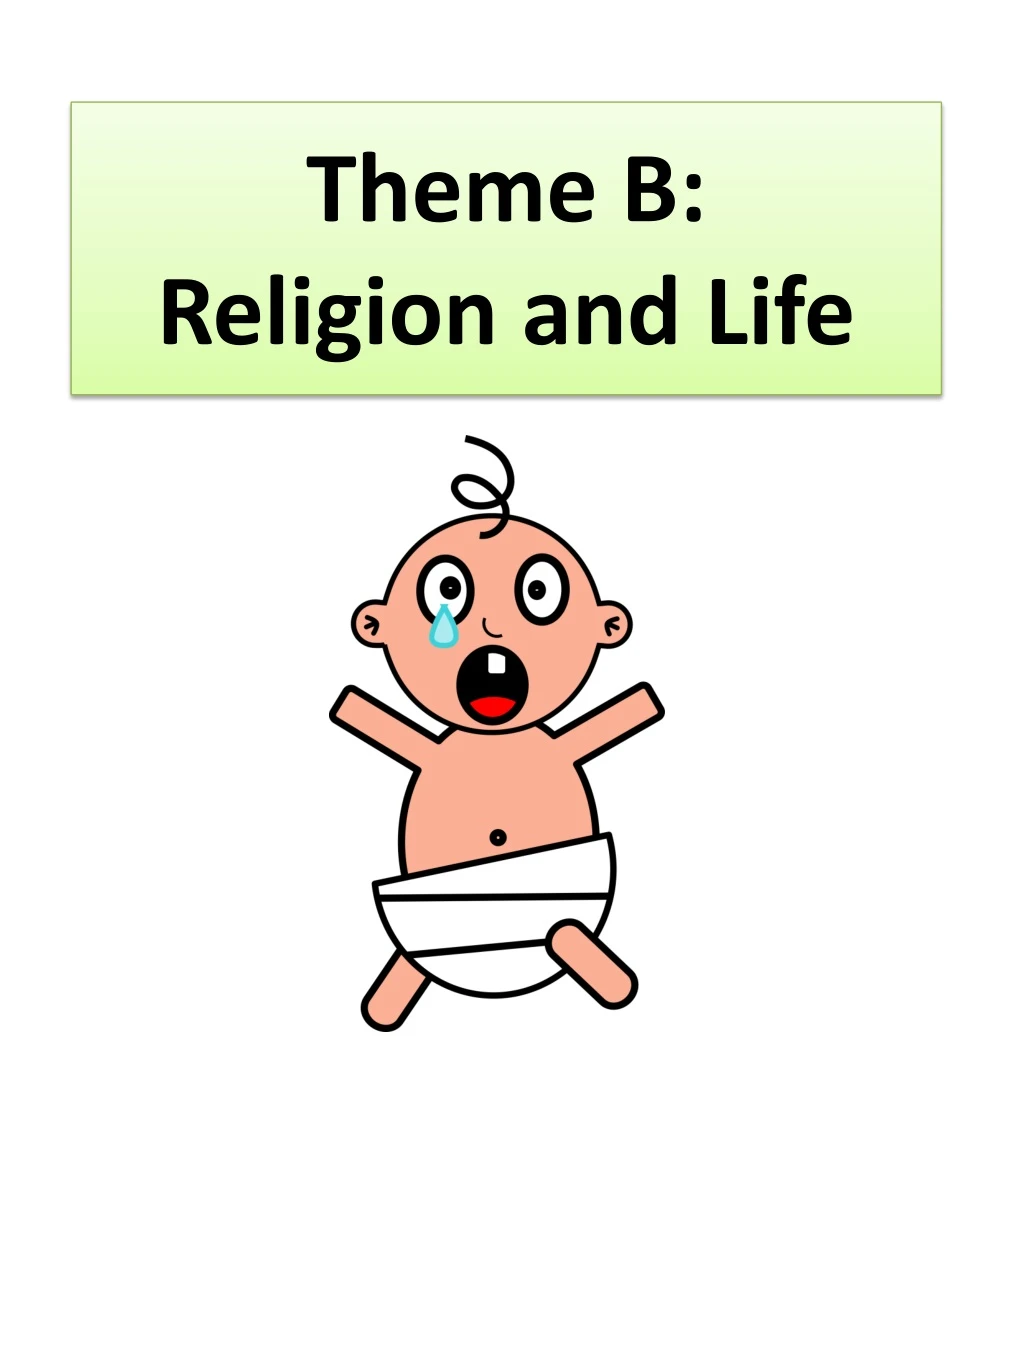 theme b religion and life